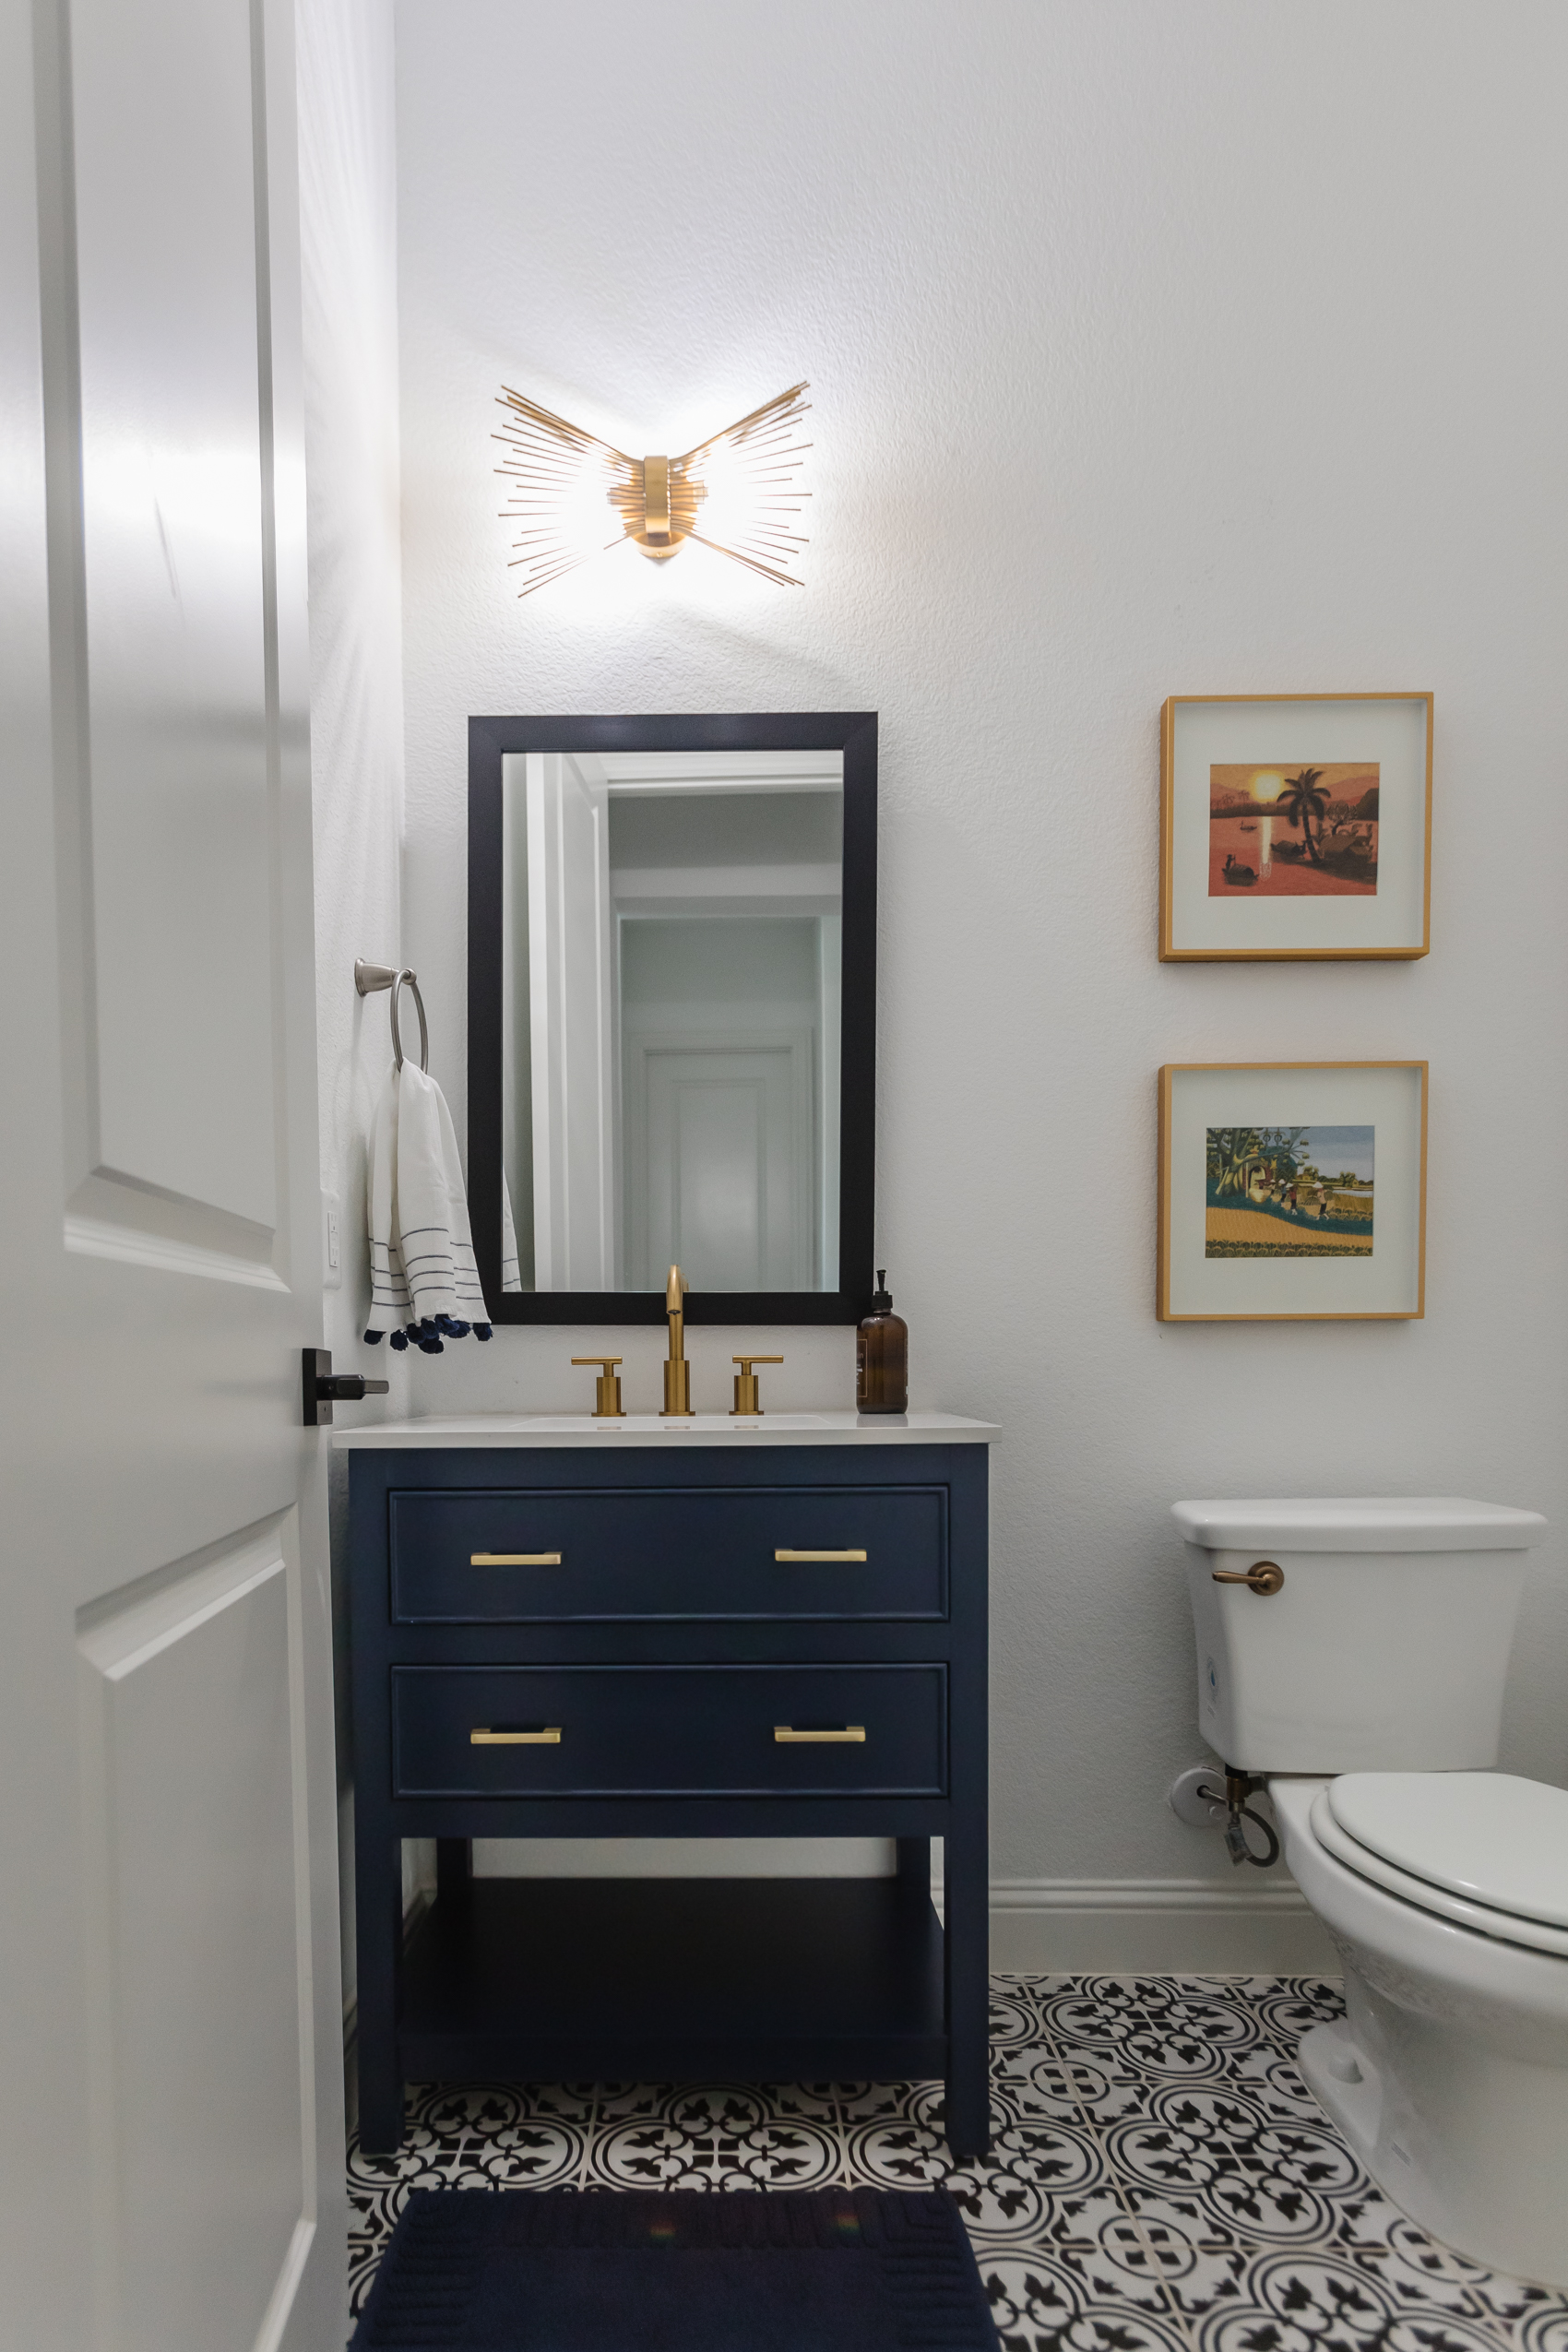 Under Bathroom Sink Organization Ideas for Small Powder Room Cabinets -  Blue i Style